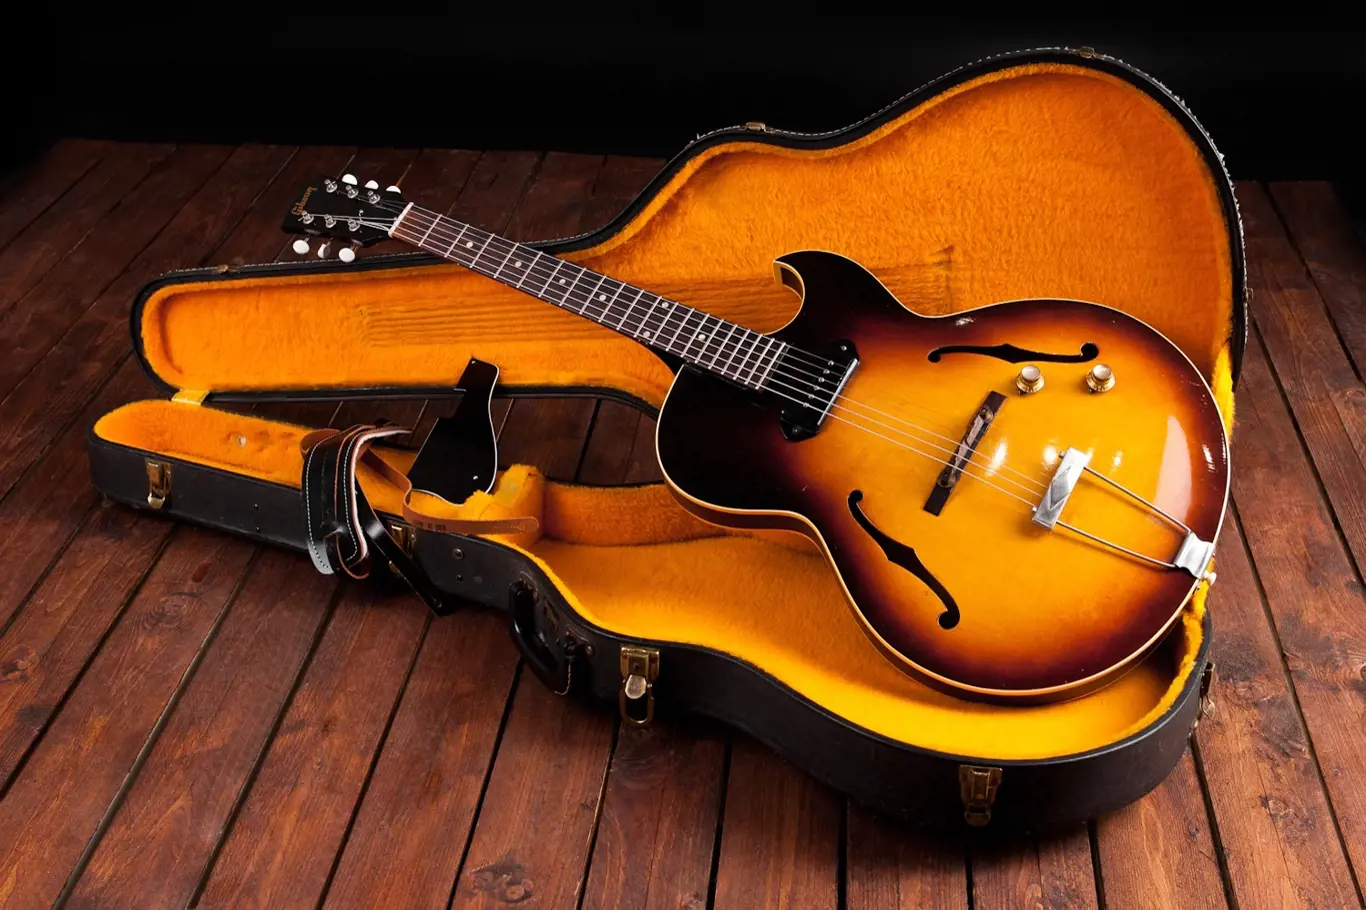 Elektrická kytara Gibson 1975 Deluxe Goldtop